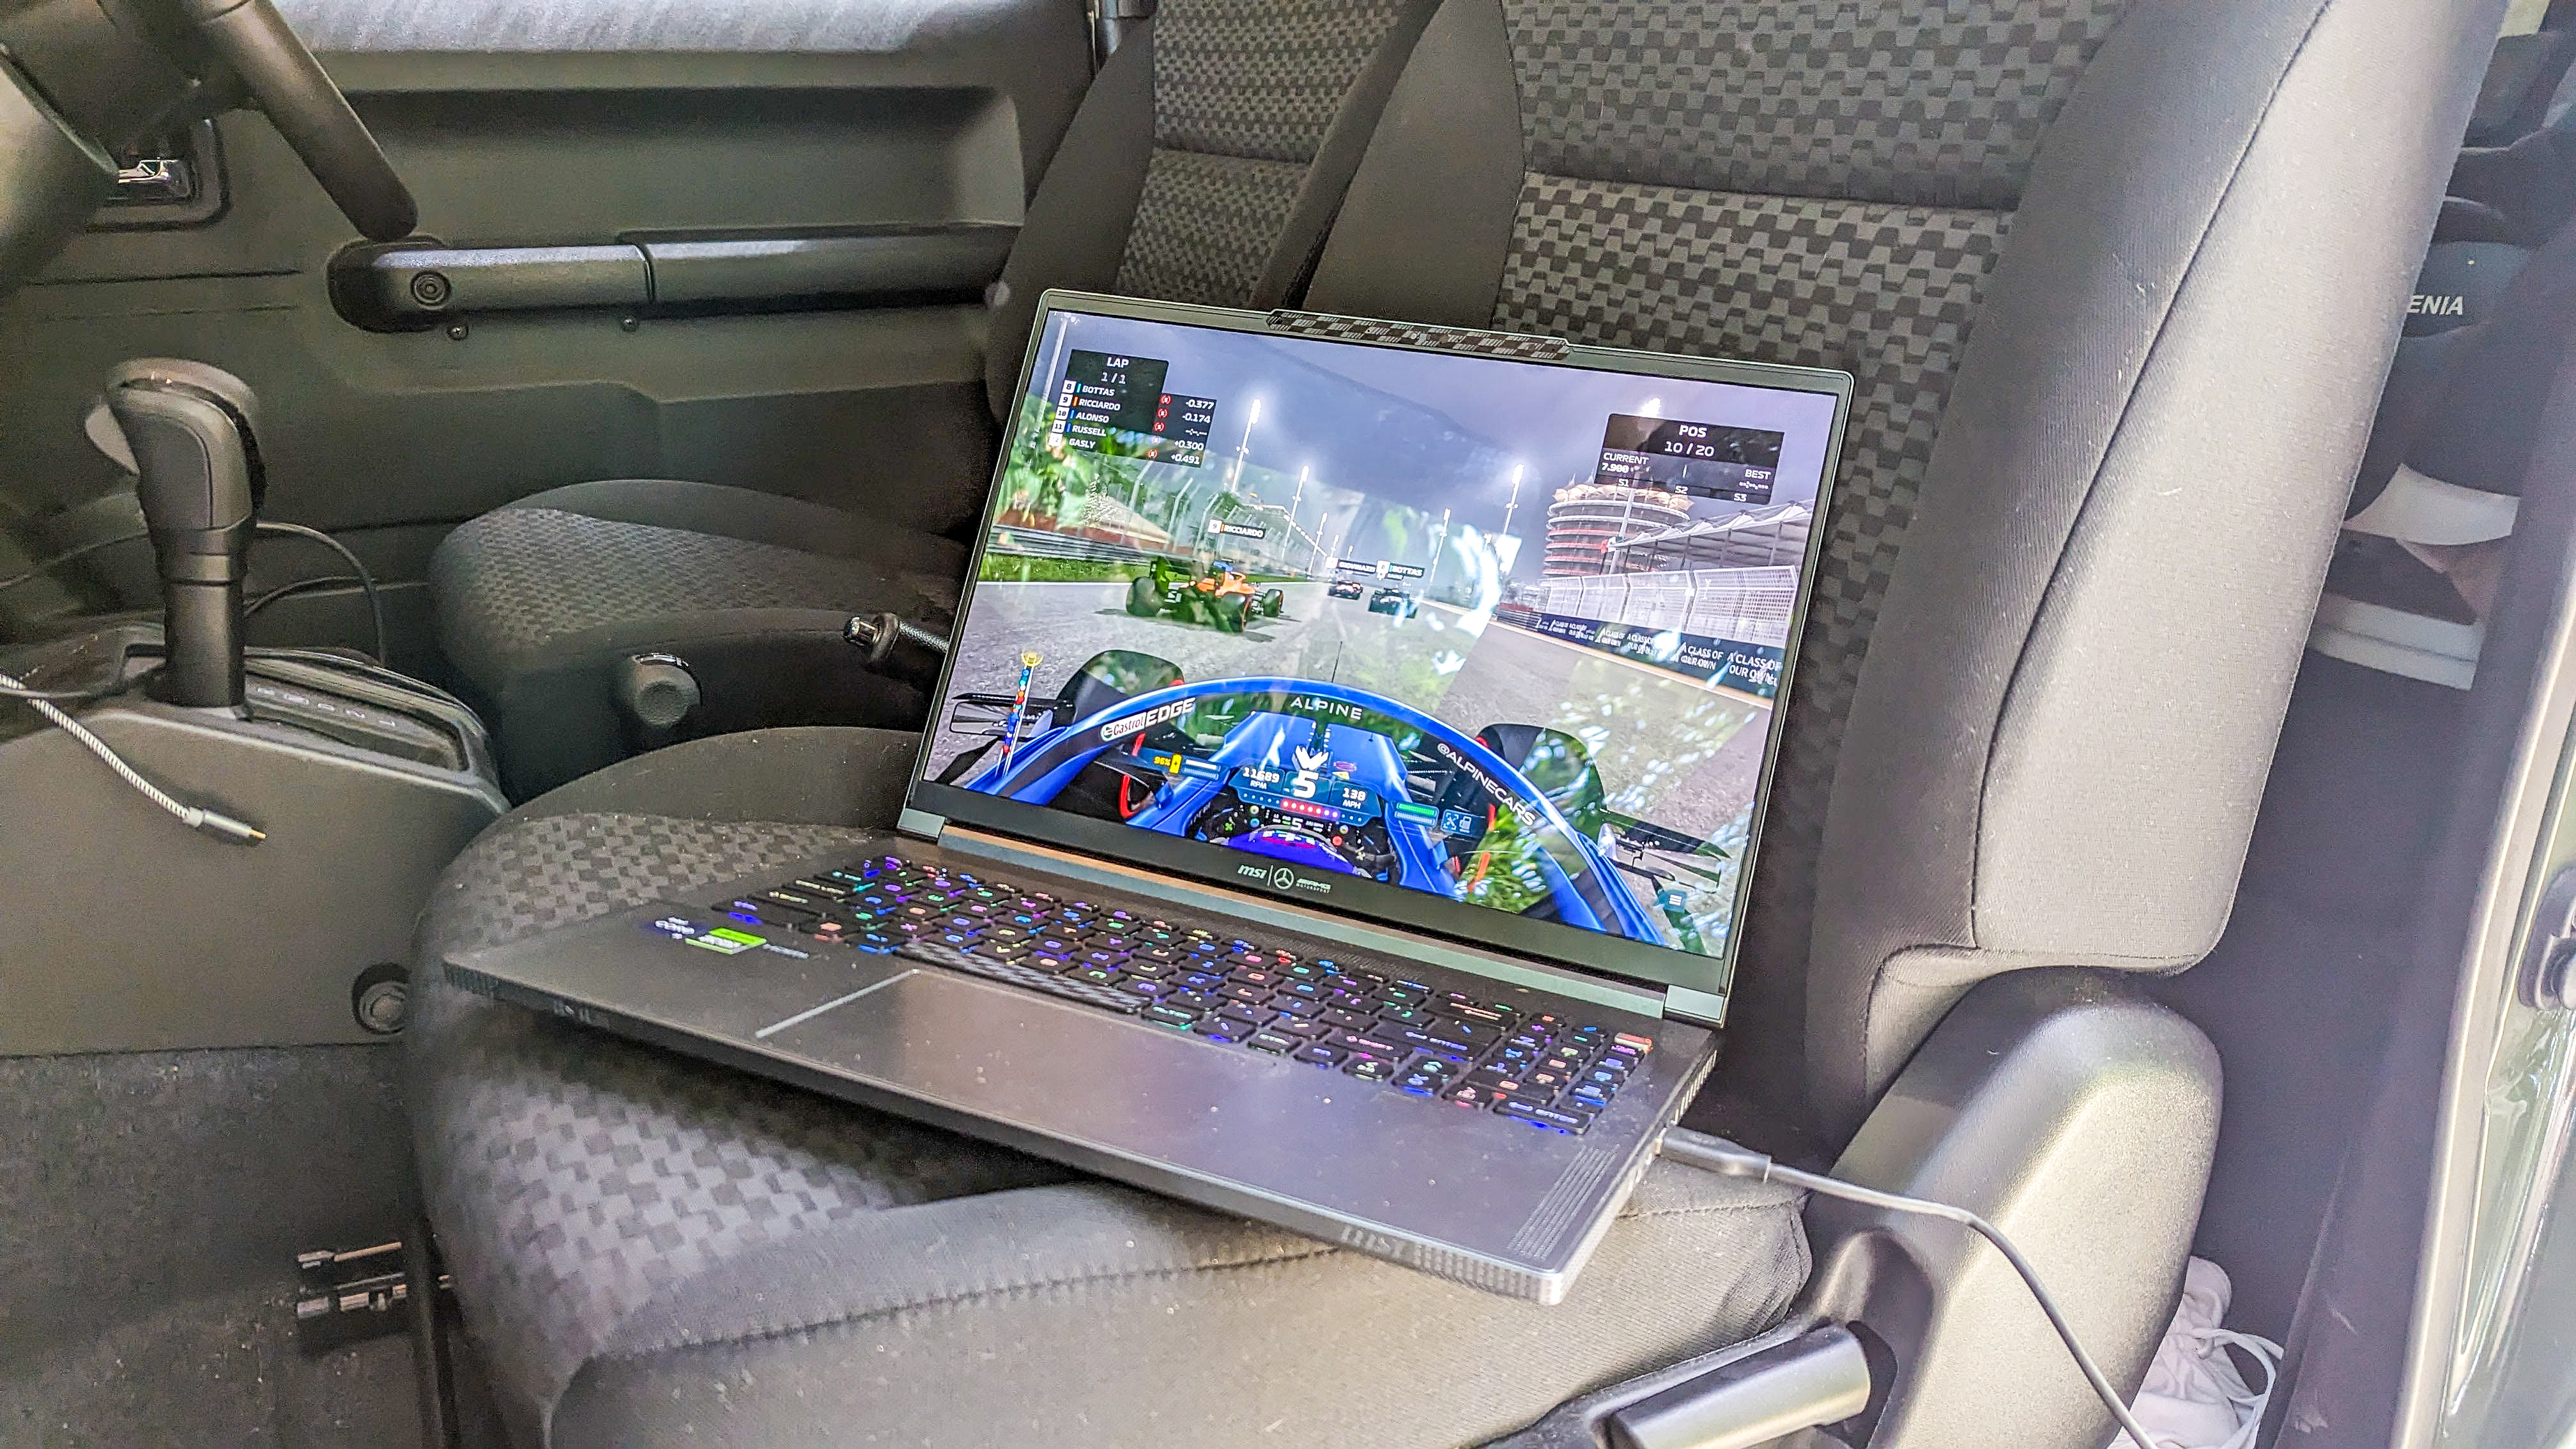 MSI laptop on a car